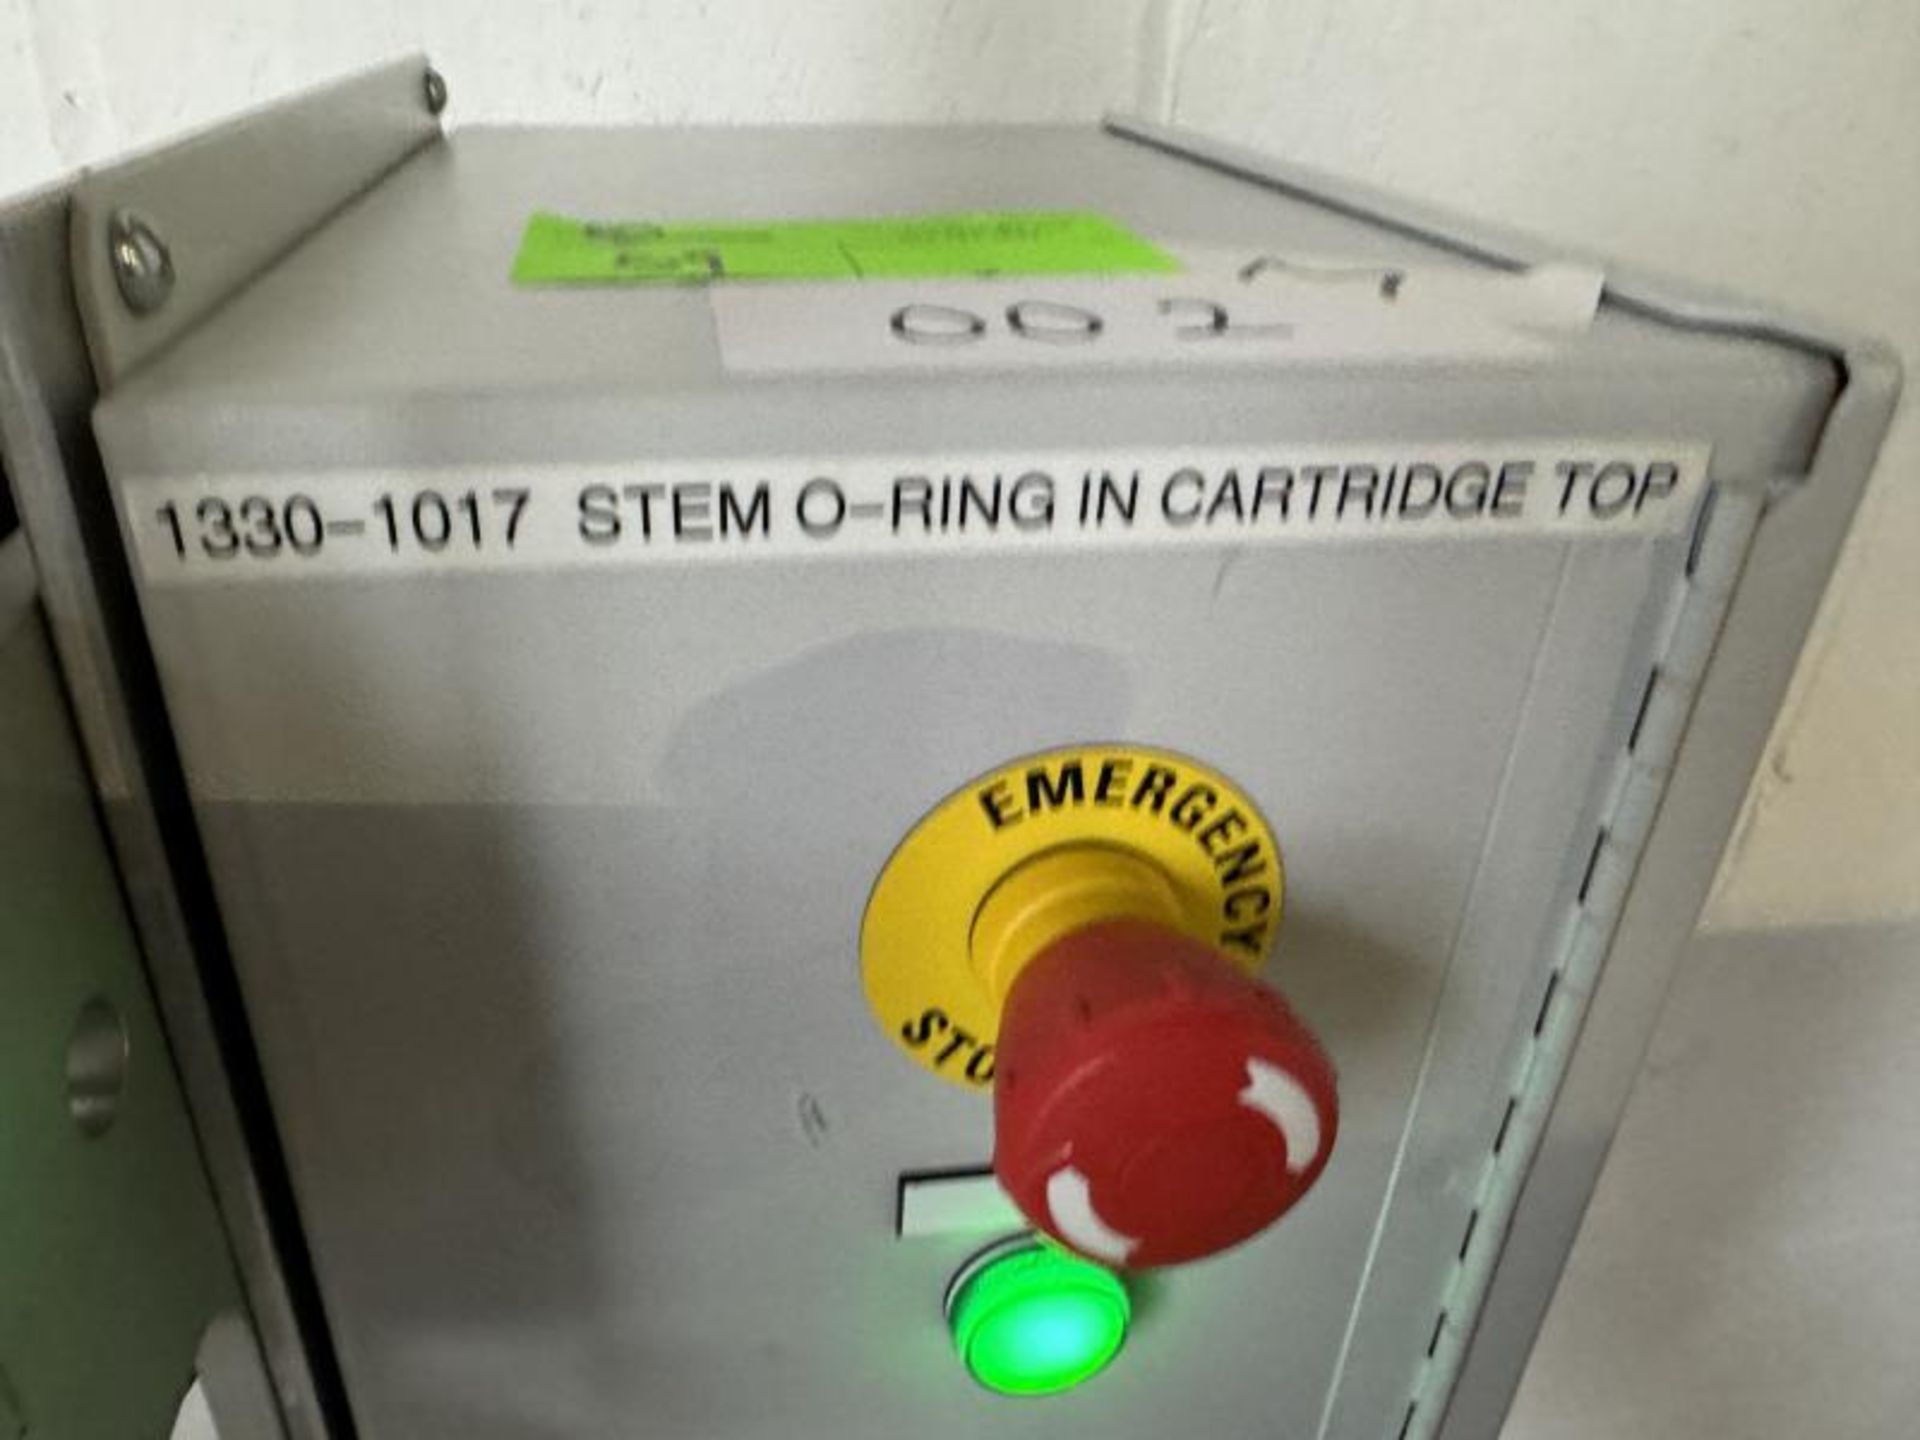 1330-1017 Stem O-Ring in Cartridge Top - Image 4 of 7